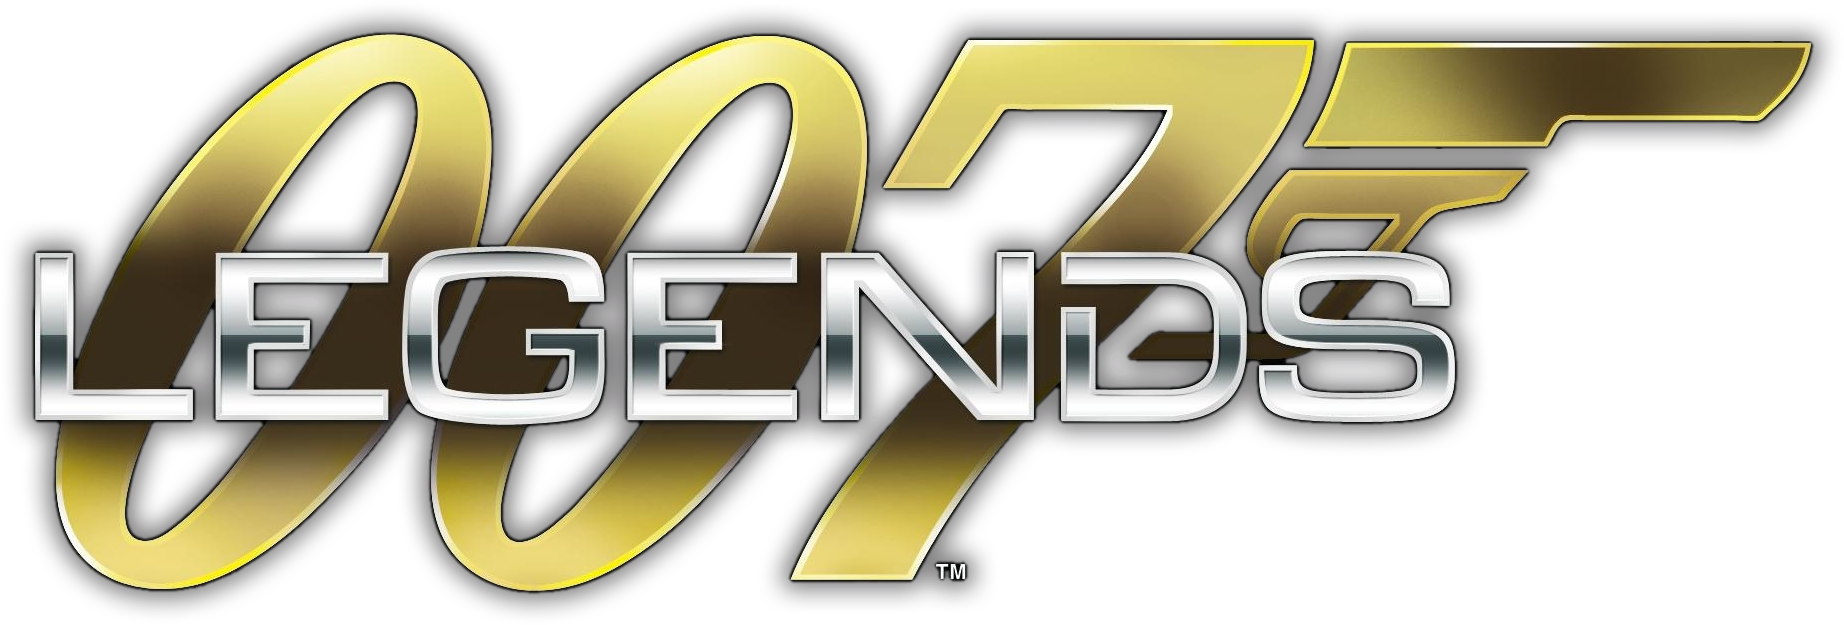 007 Legends Logo 2 - James Bond 007 Png Clipart (1902x682), Png Download